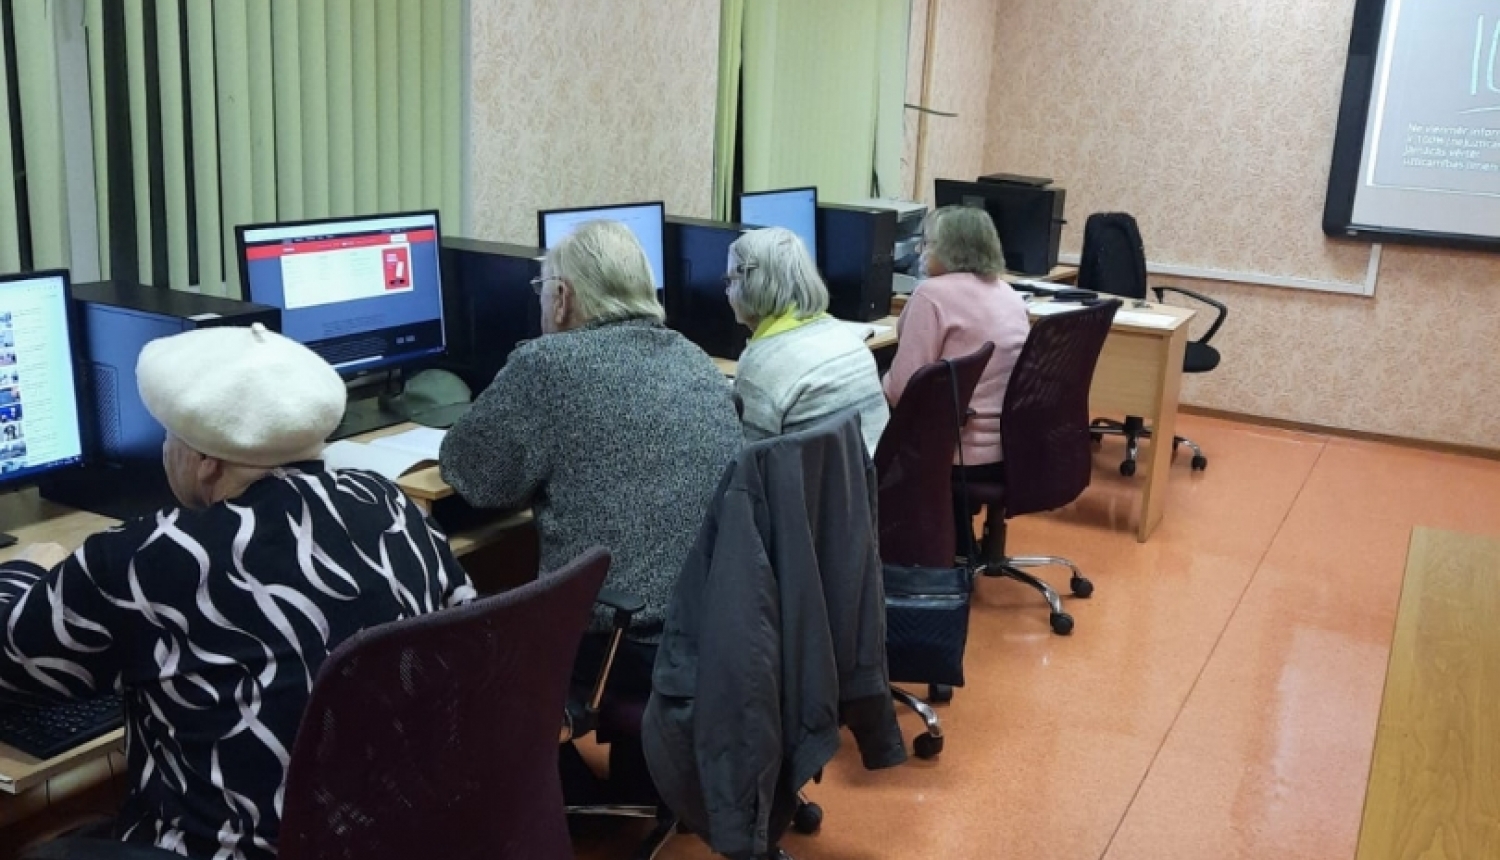 veci cilvēki sēž pie datoriem